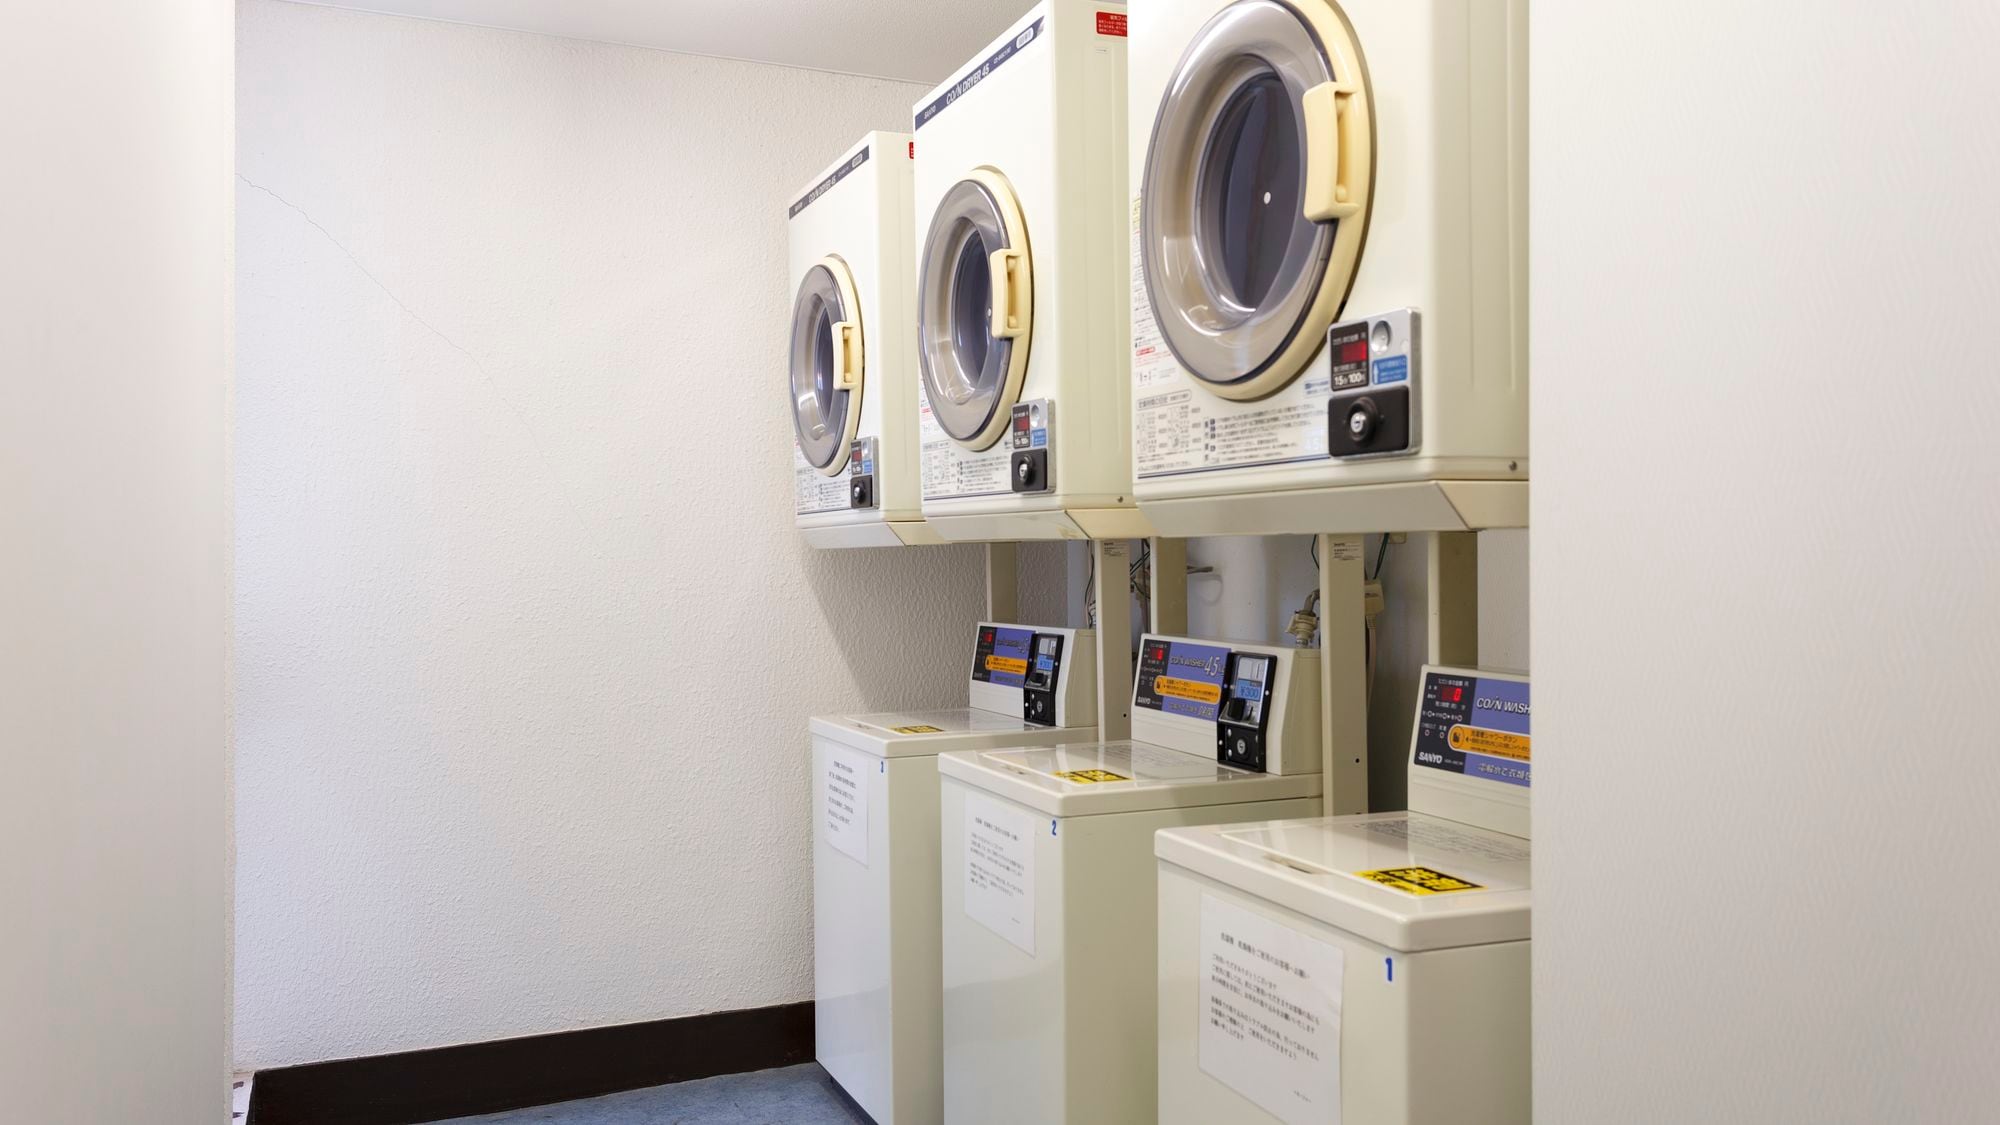 [Coin laundry] Price: 300 yen per washing machine / 100 yen for dryer 15 minutes